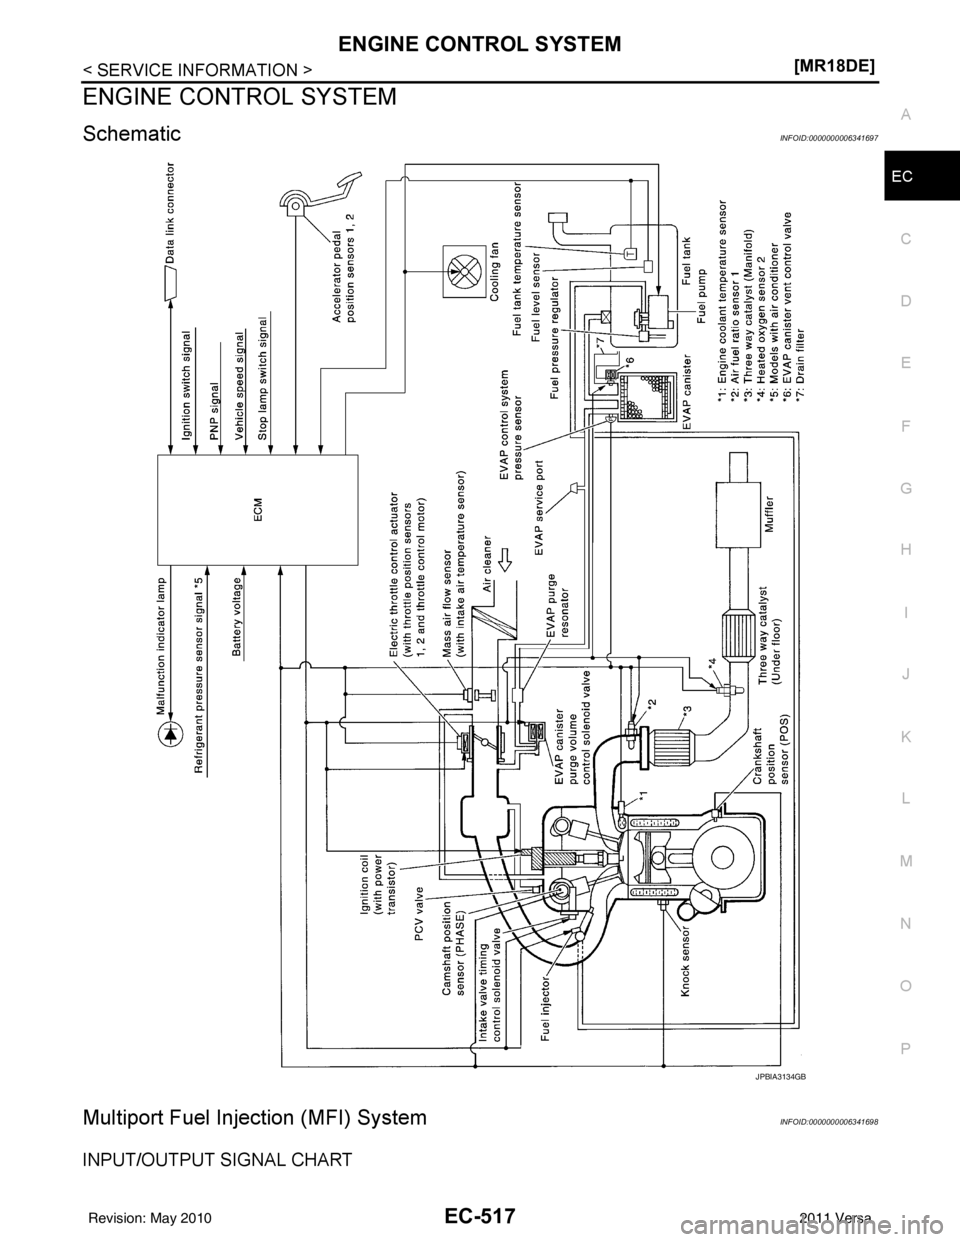 NISSAN LATIO 2011  Service Repair Manual ENGINE CONTROL SYSTEMEC-517
< SERVICE INFORMATION > [MR18DE]
C
D
E
F
G H
I
J
K L
M A
EC
NP
O
ENGINE CONTROL SYSTEM
SchematicINFOID:0000000006341697
Multiport Fuel Inje
ction (MFI) SystemINFOID:0000000